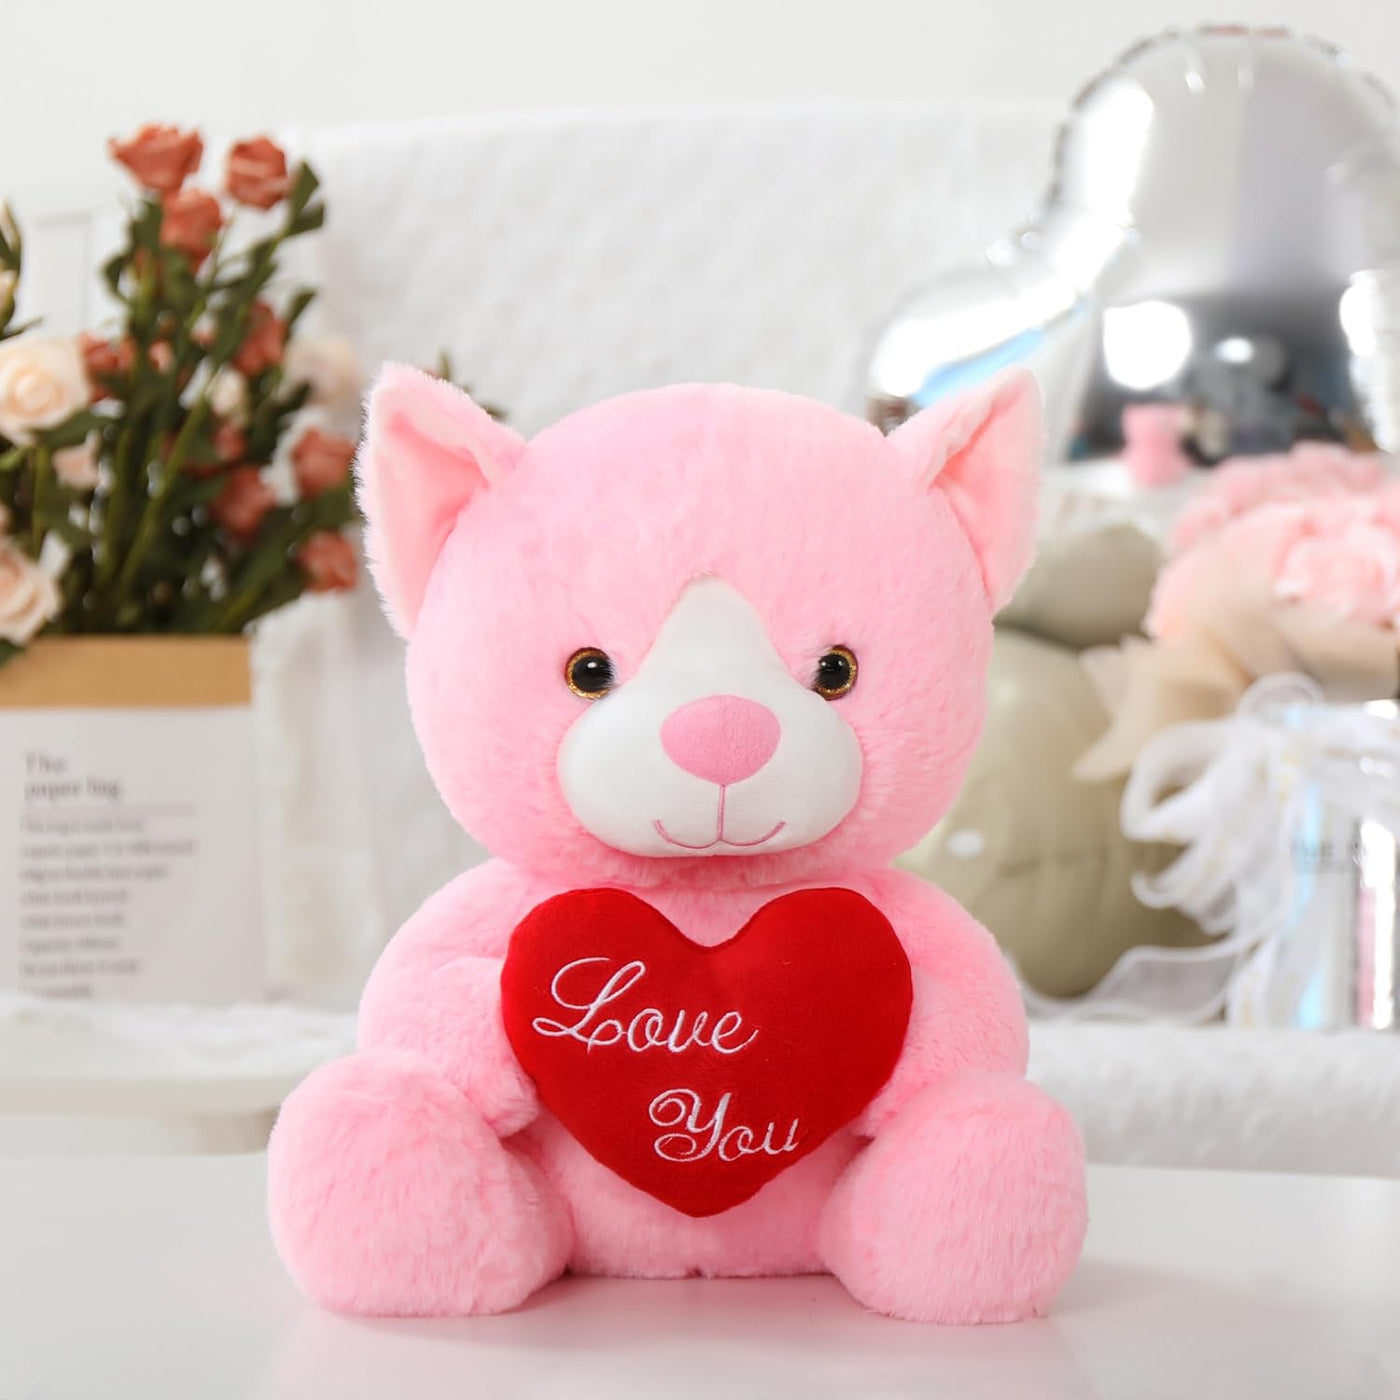 Cat Plush Toy, Pink, 12 Inches - MorisMos Plush Toys